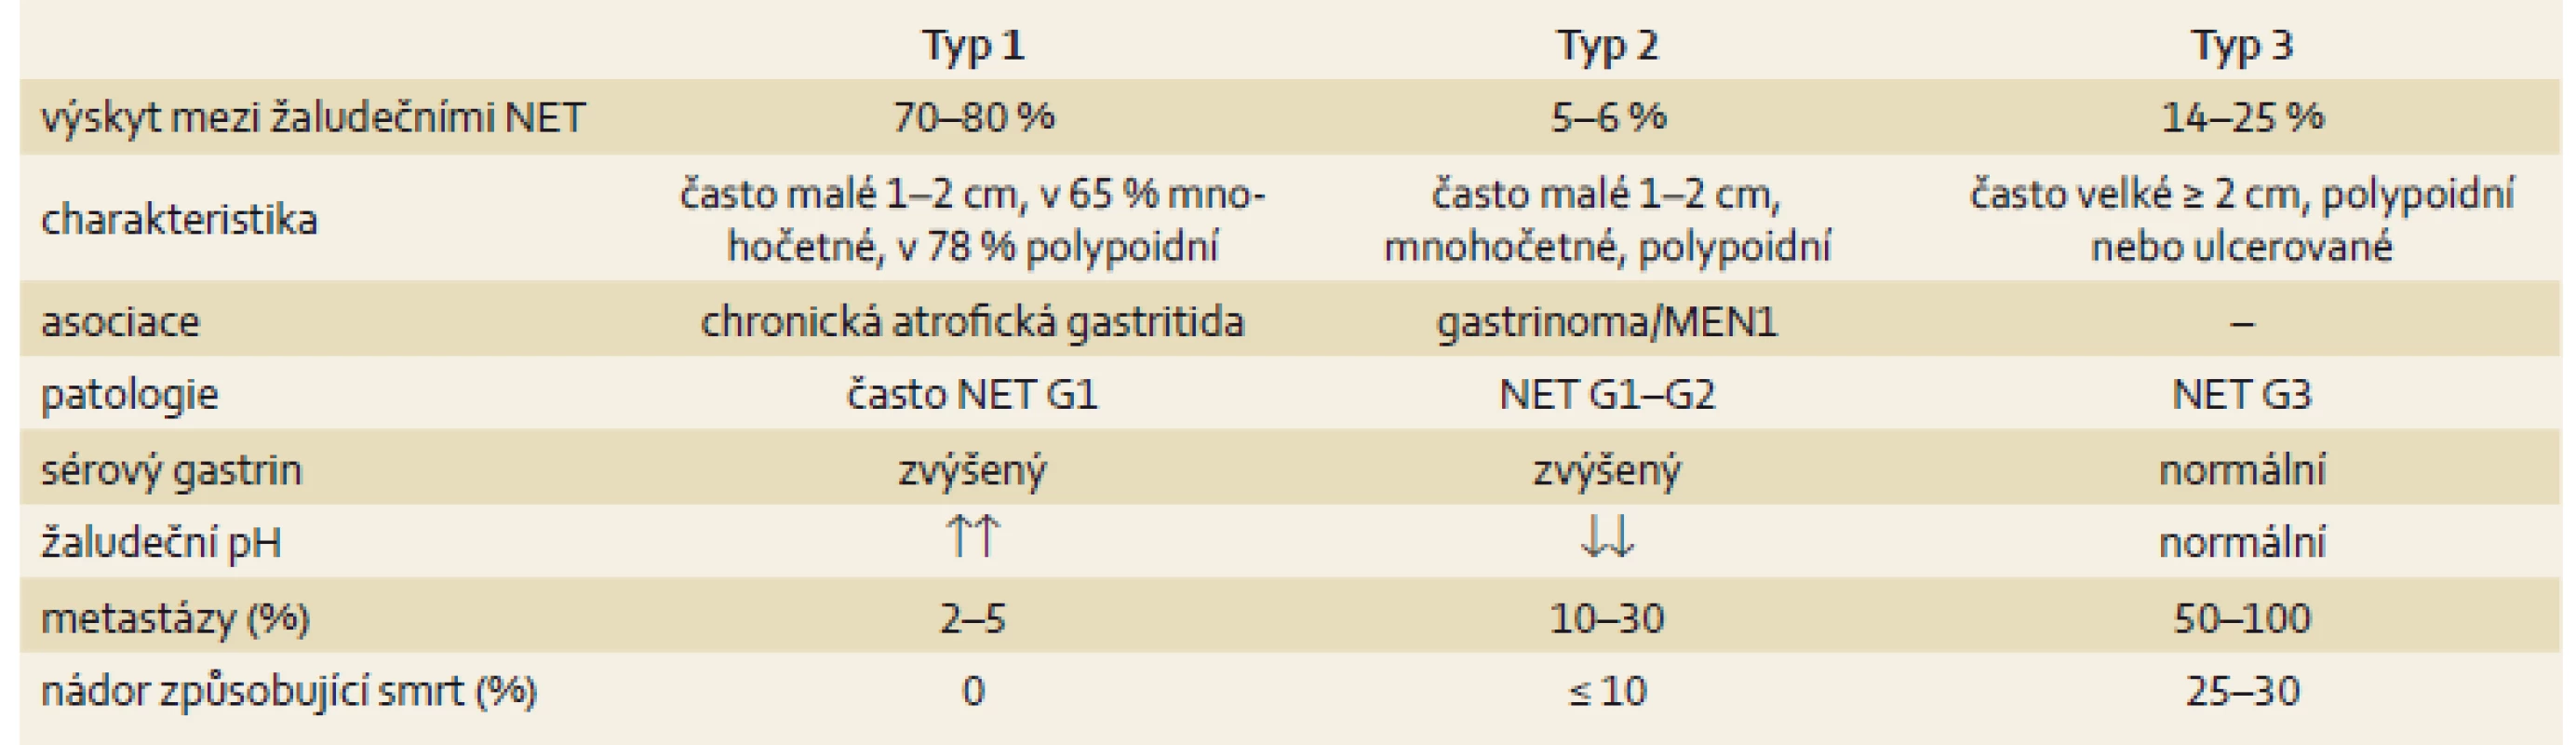 Hlavní charakteristika neuroendokrinních nádorů žaludku.
Tab. 2. Main characteristics of neuroendocrine tumours of the stomach.